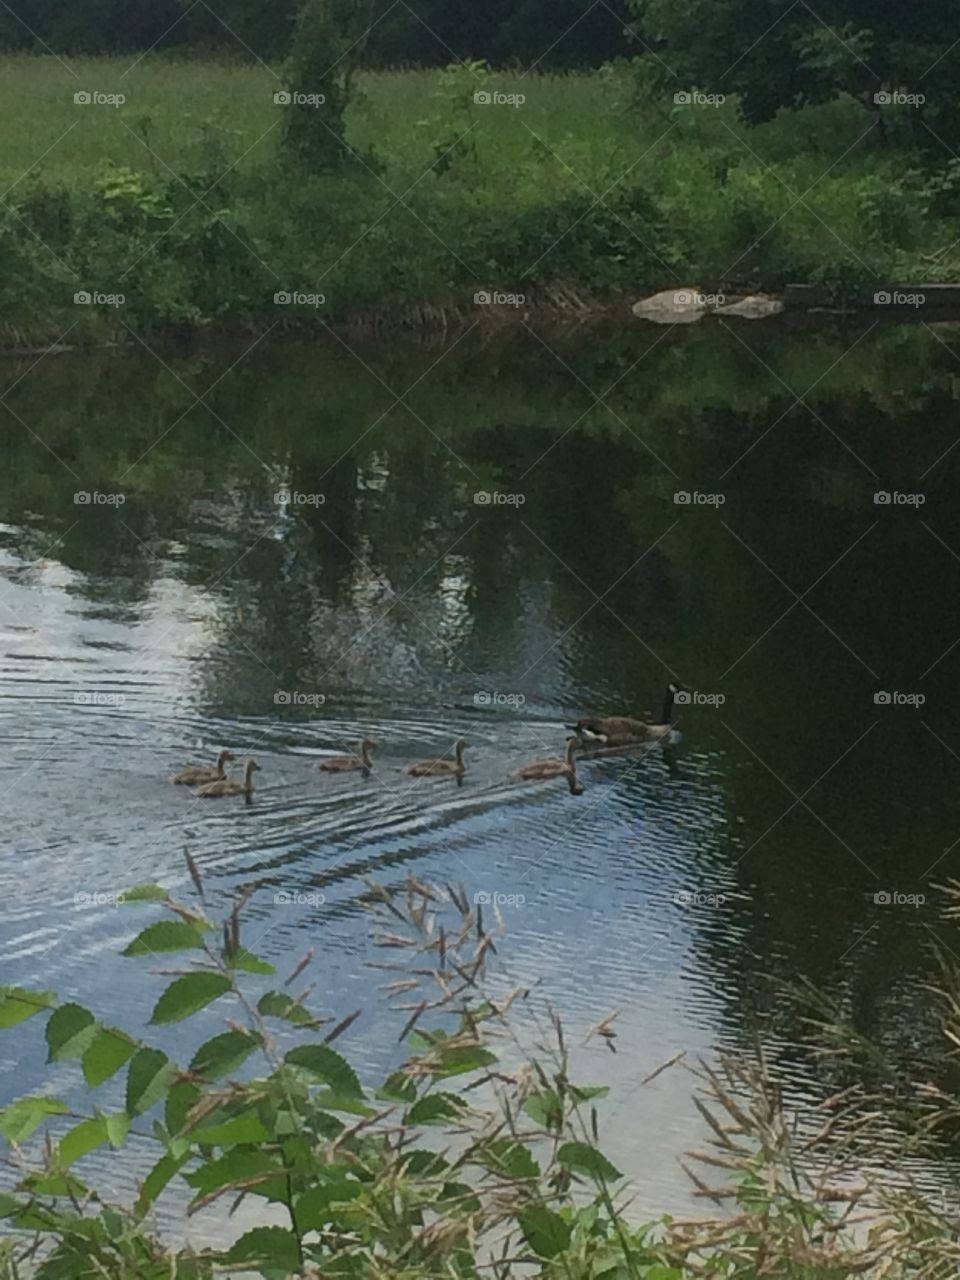 Ducks. Ducks at the pond